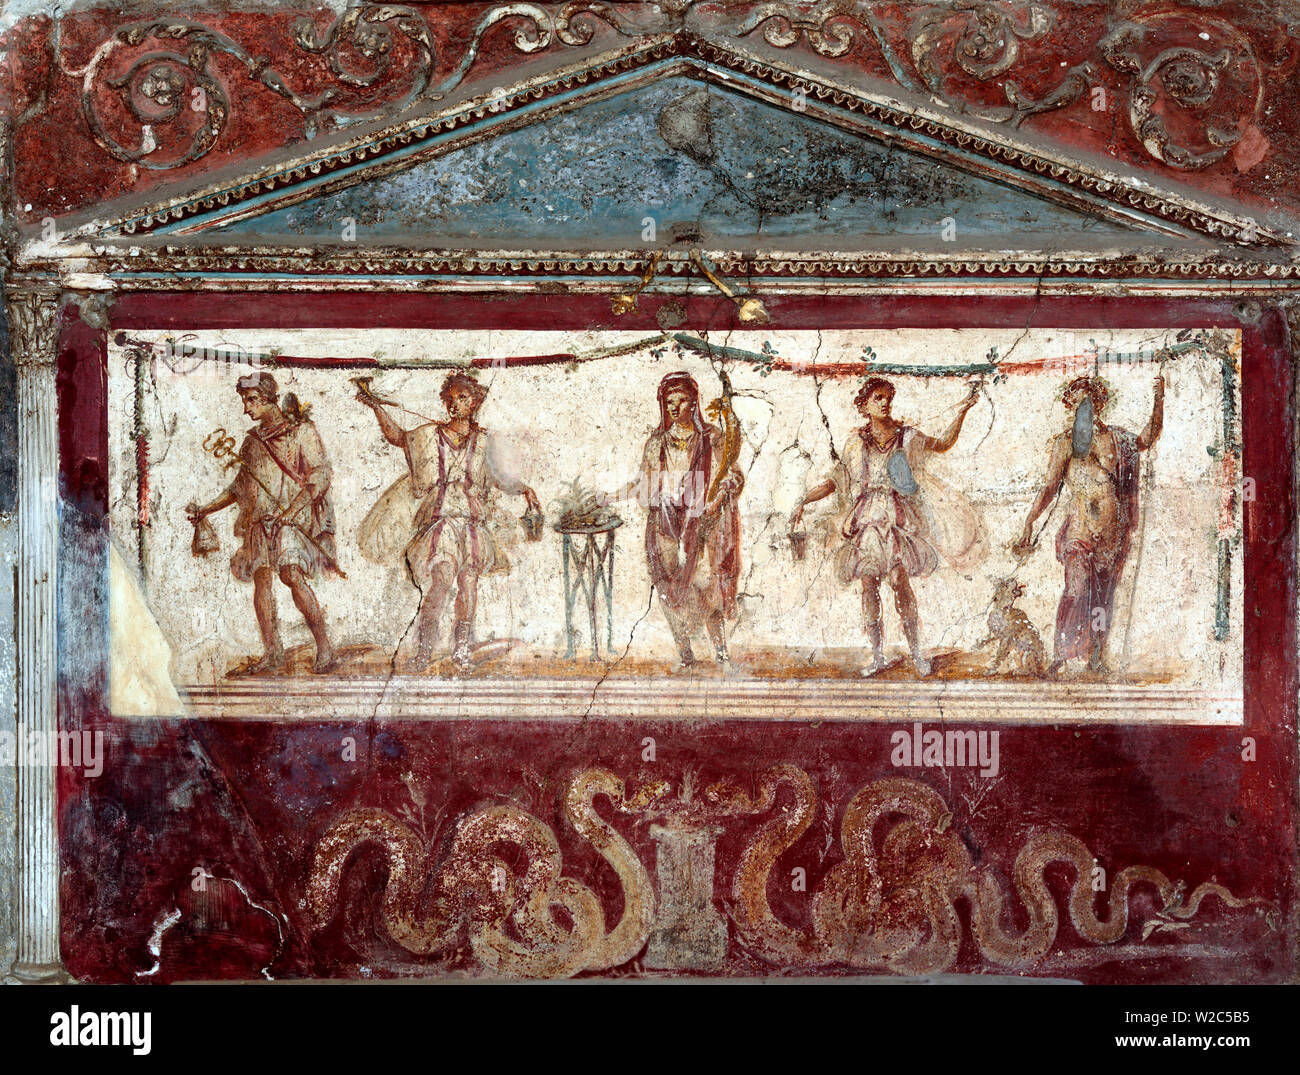 La peinture murale antique, Thermopolium de Vetutius Placidus, Pompéi, Campanie, Italie Banque D'Images